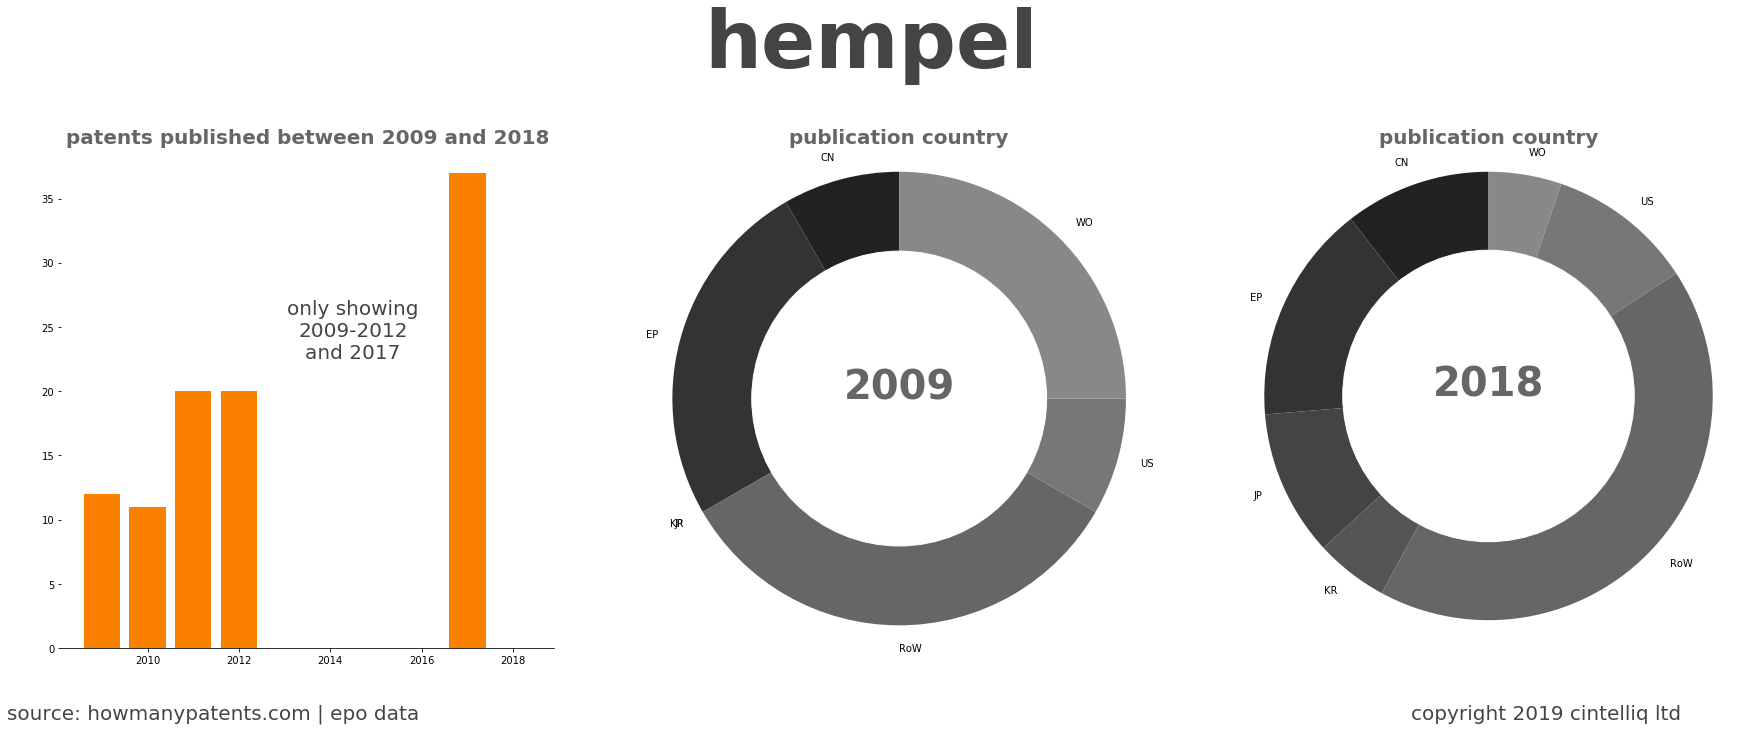 summary of patents for Hempel